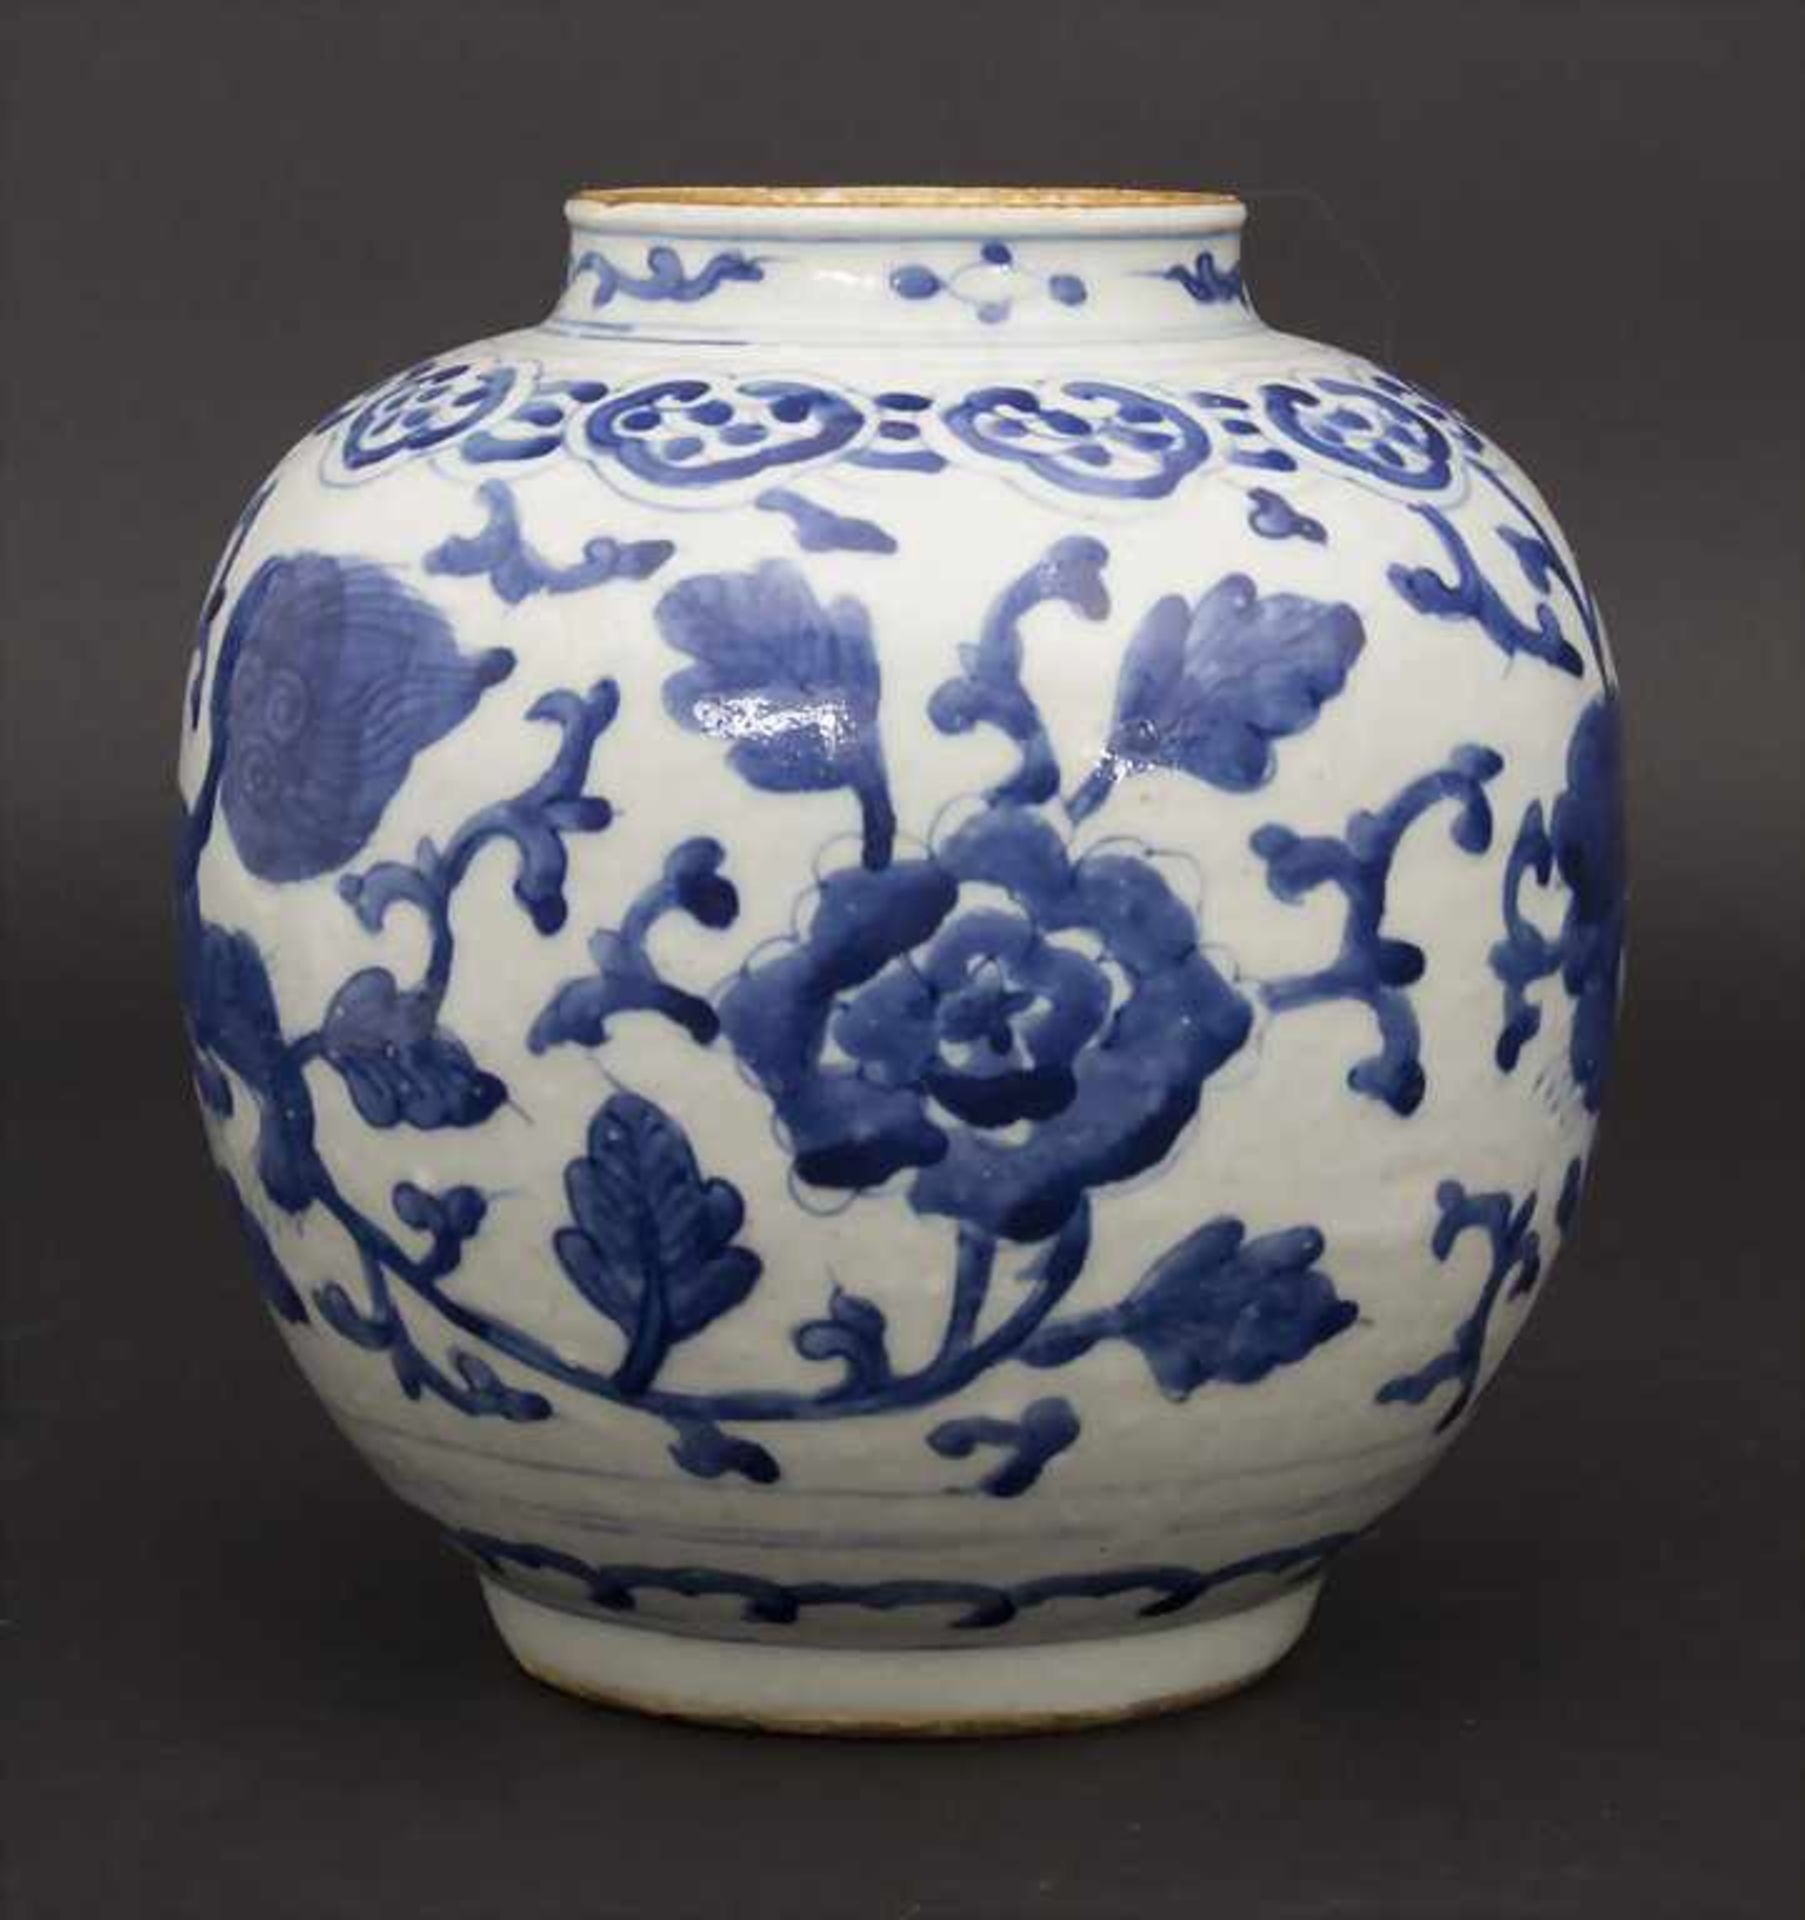 Schultertopf mit unterglasurblauer Malerei, Qing Dynastie, China, 18./19. Jh. - Image 2 of 11